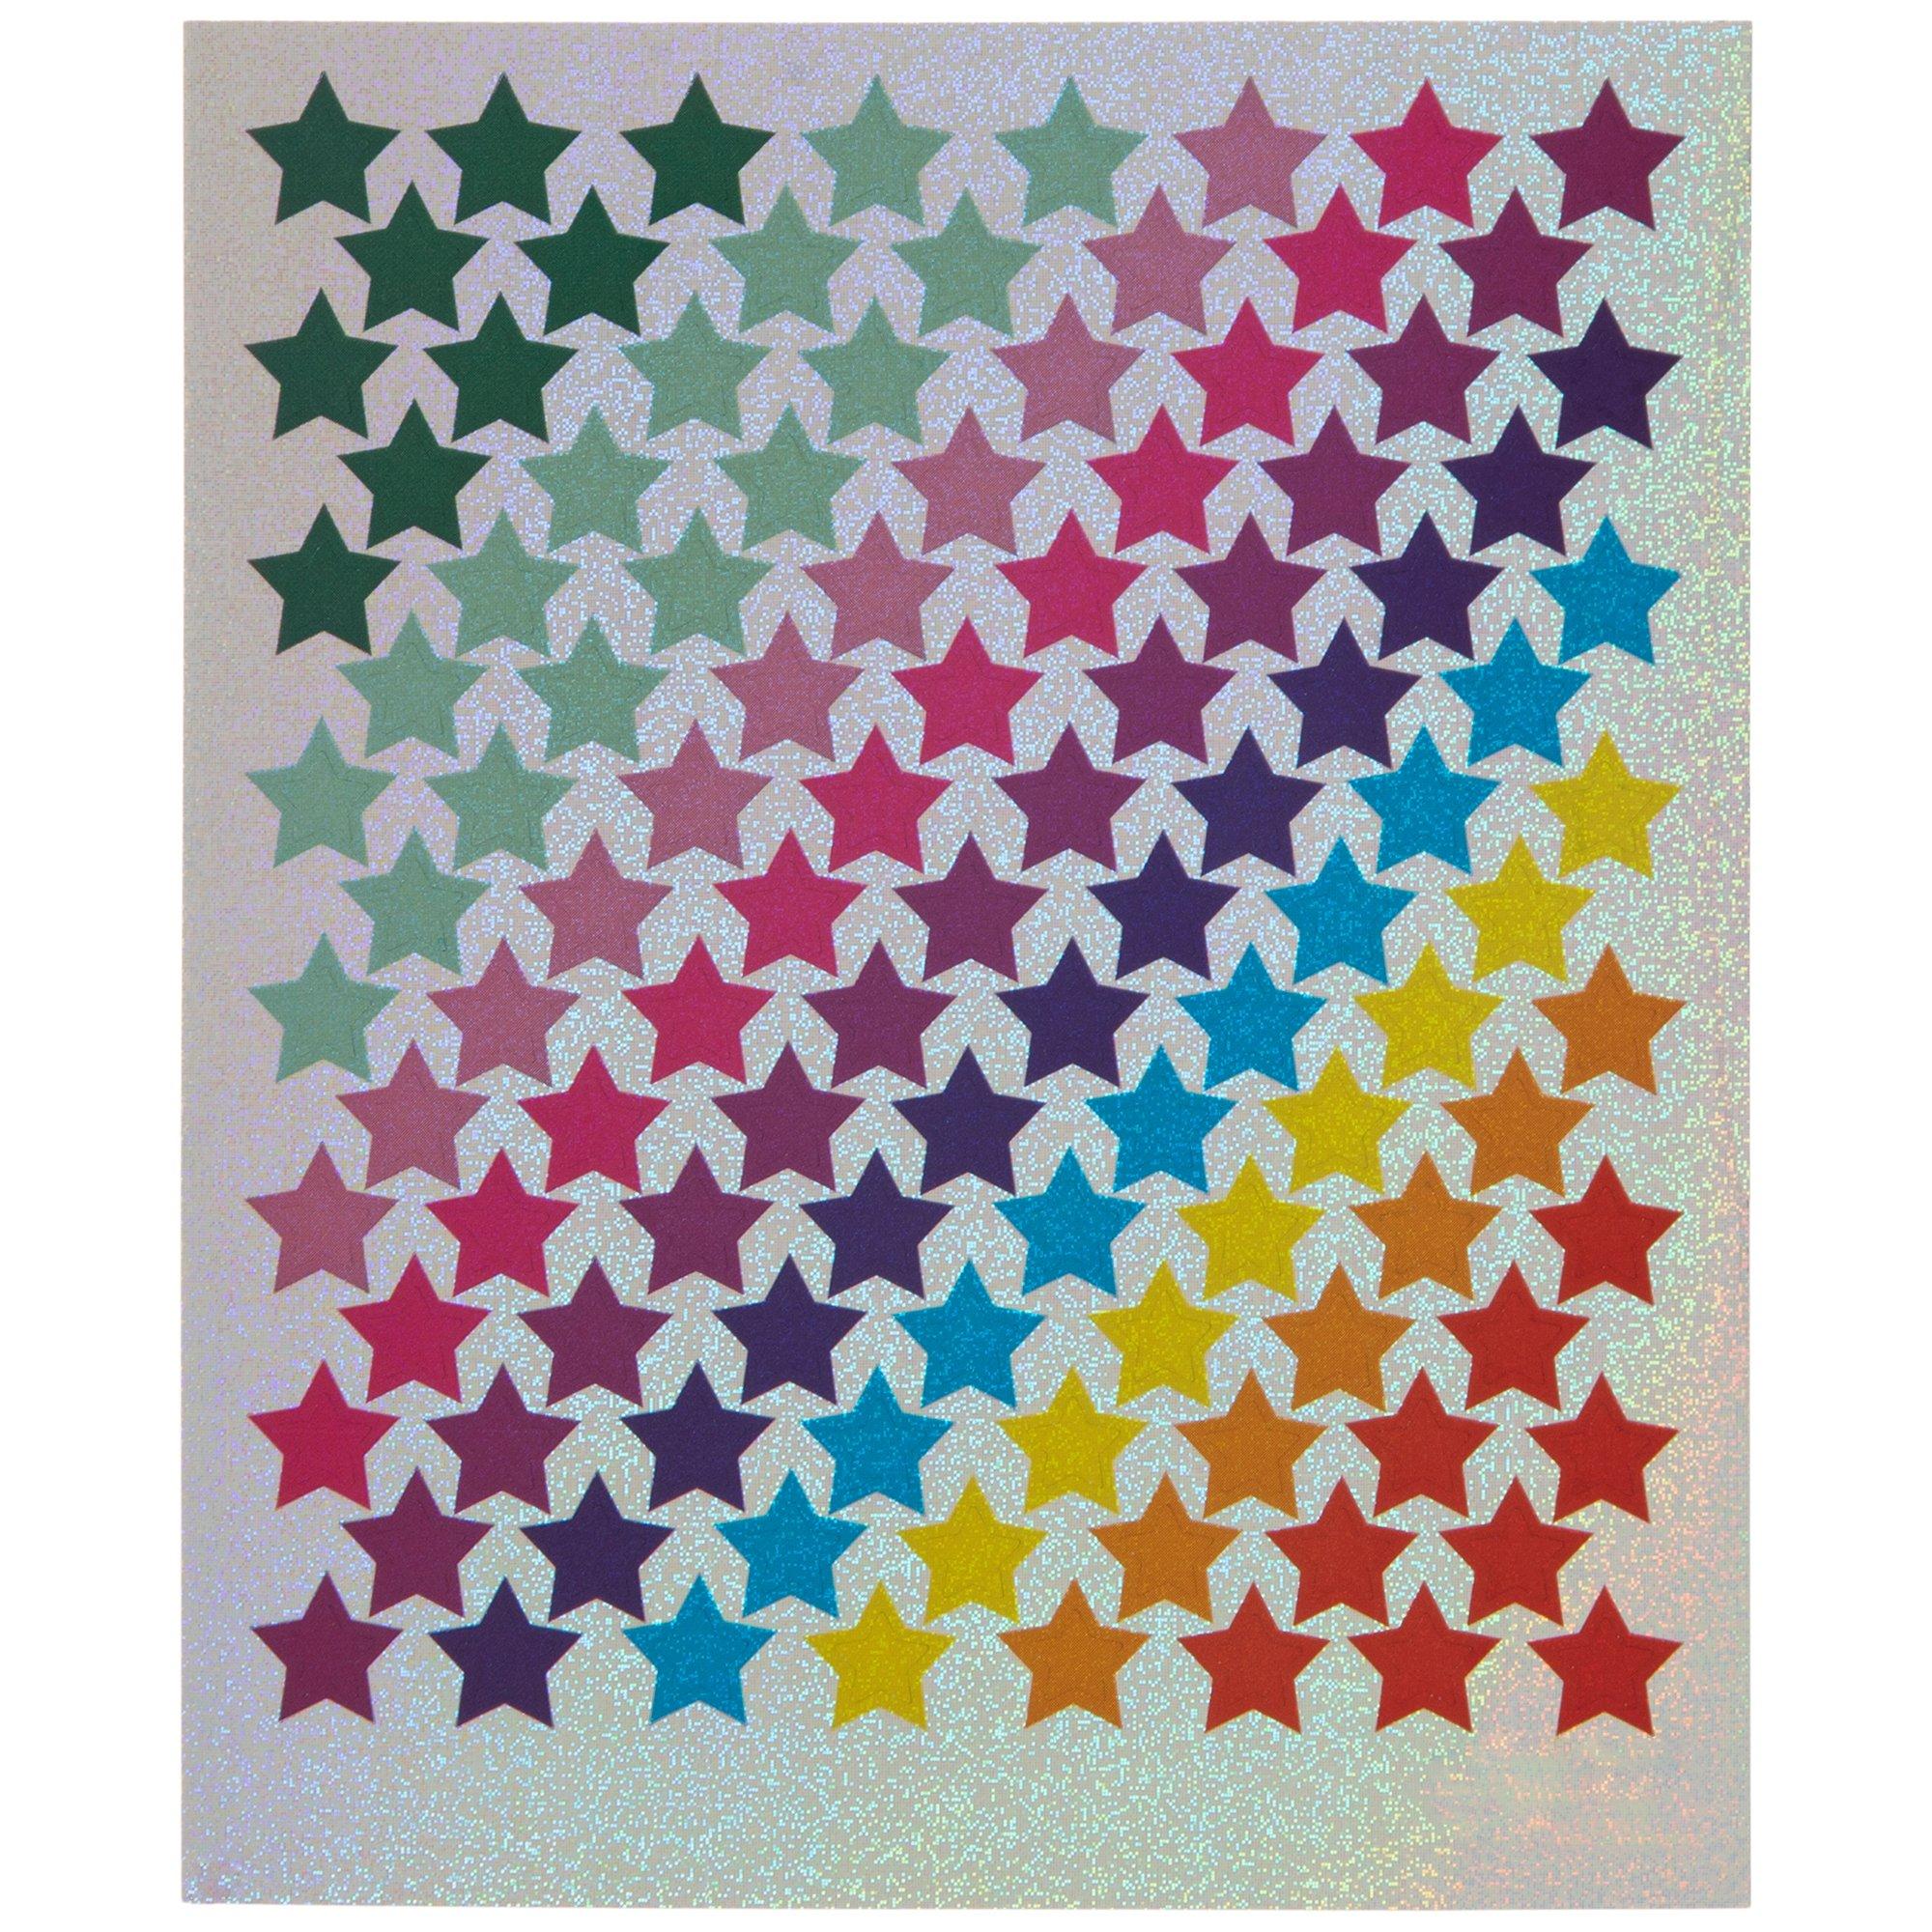 Multi-Color Star Stickers, Hobby Lobby